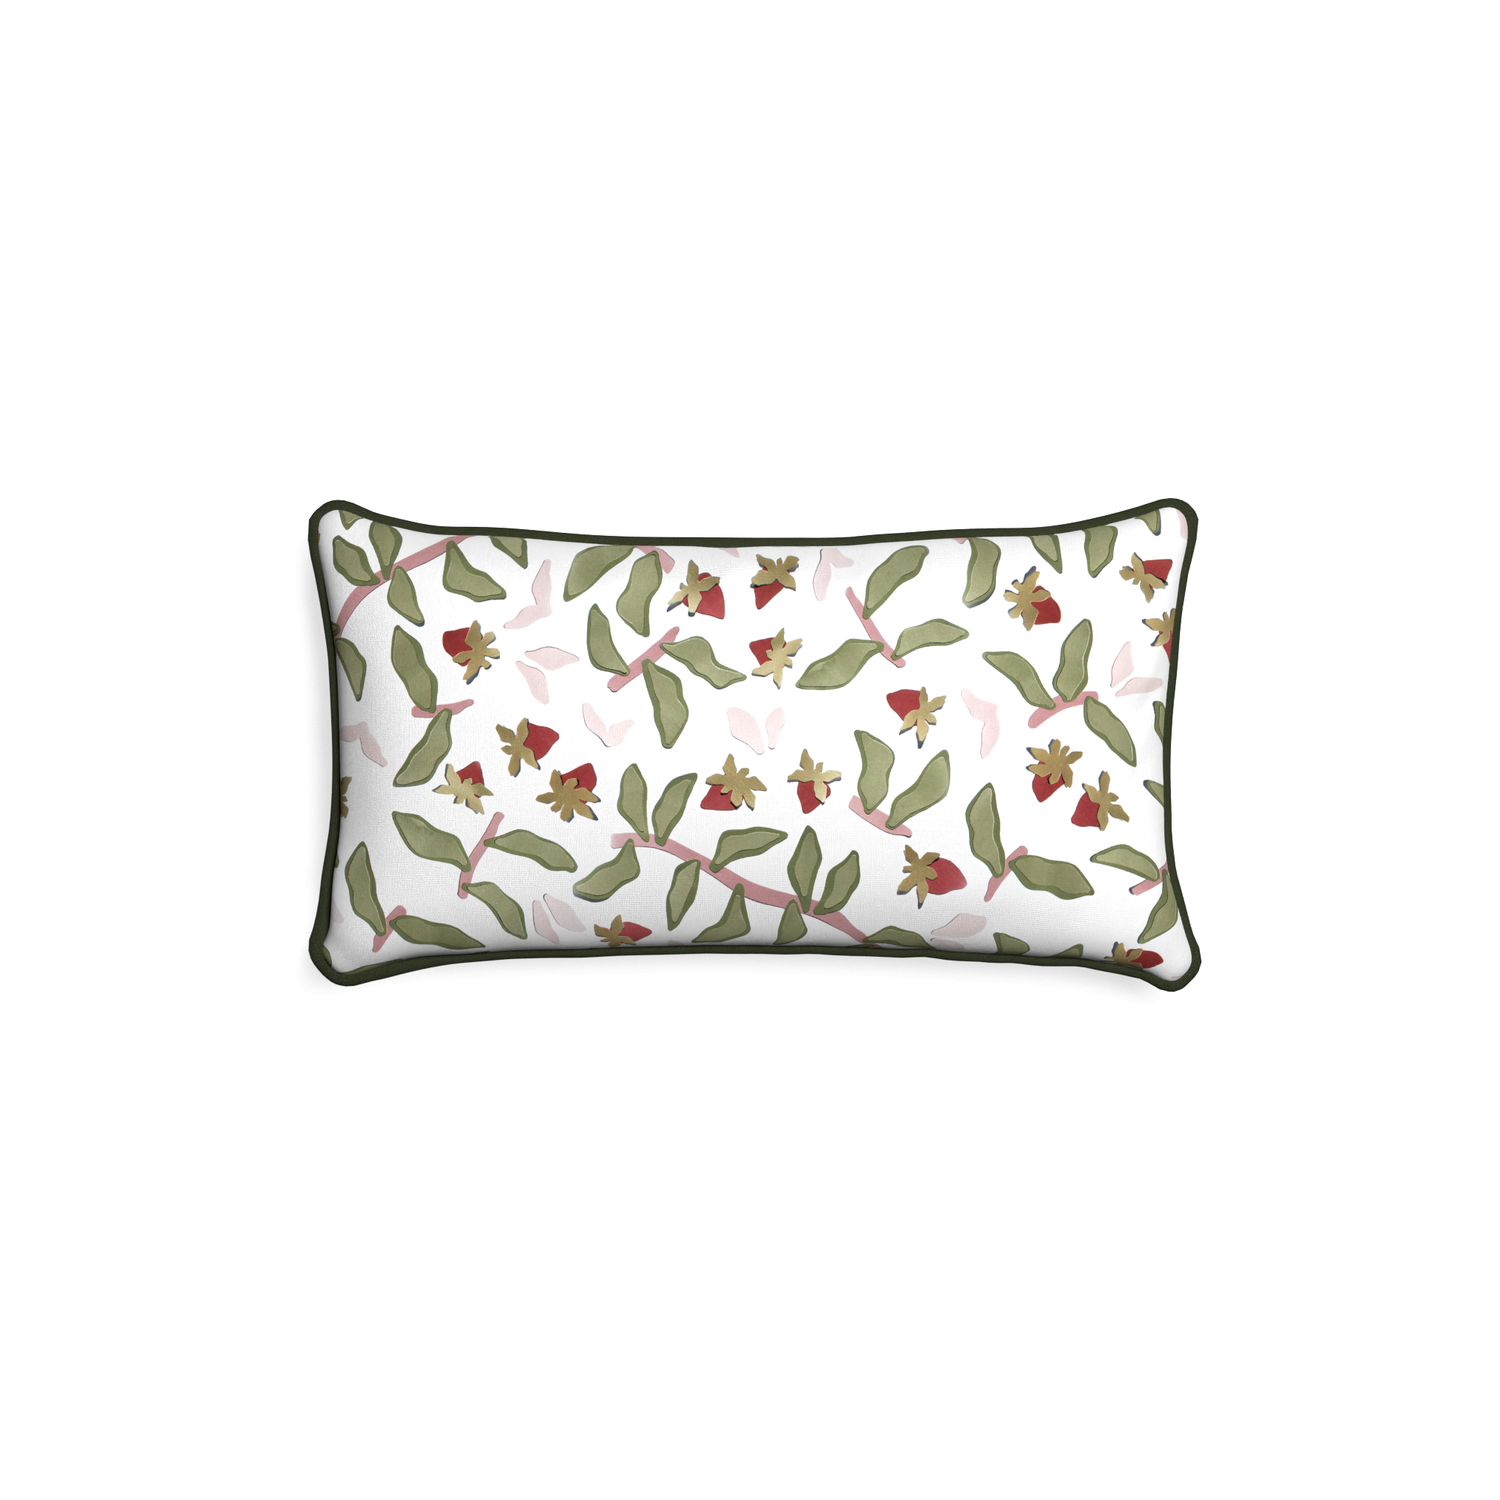 Petite-lumbar nellie custom strawberry & botanicalpillow with f piping on white background